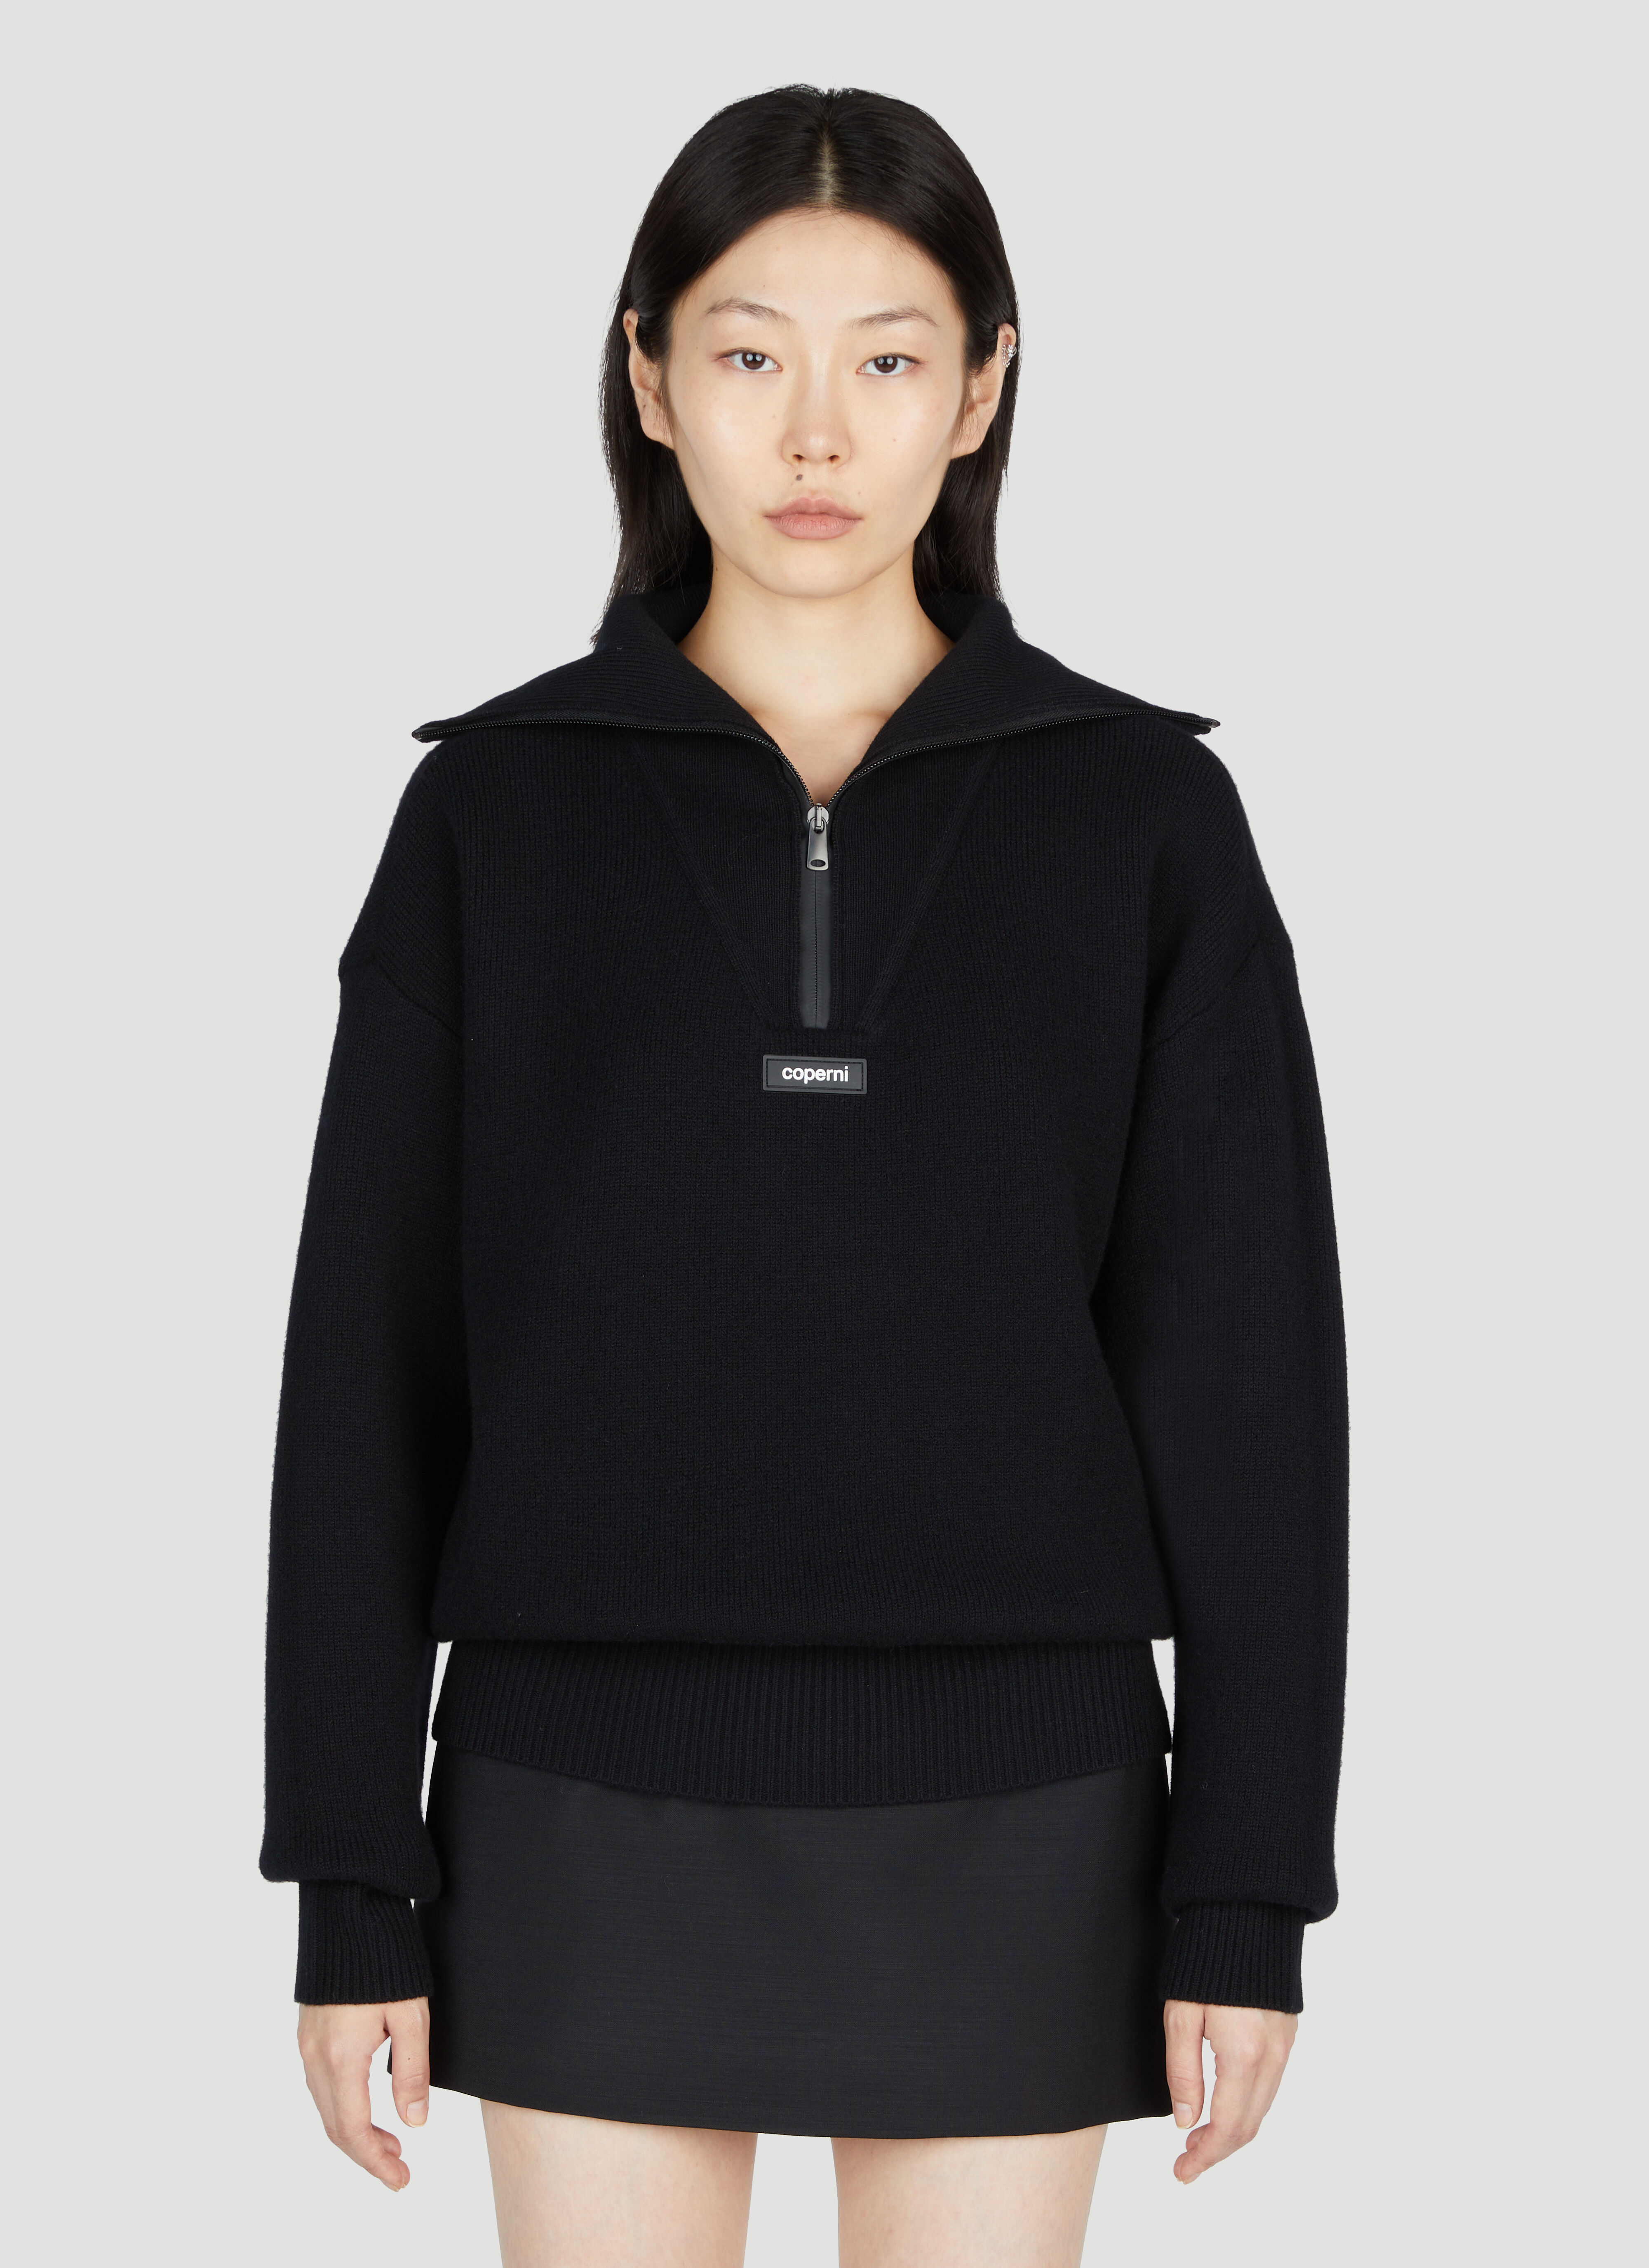 Coperni Half-Zip Boxy Sweater Black cpn0253004